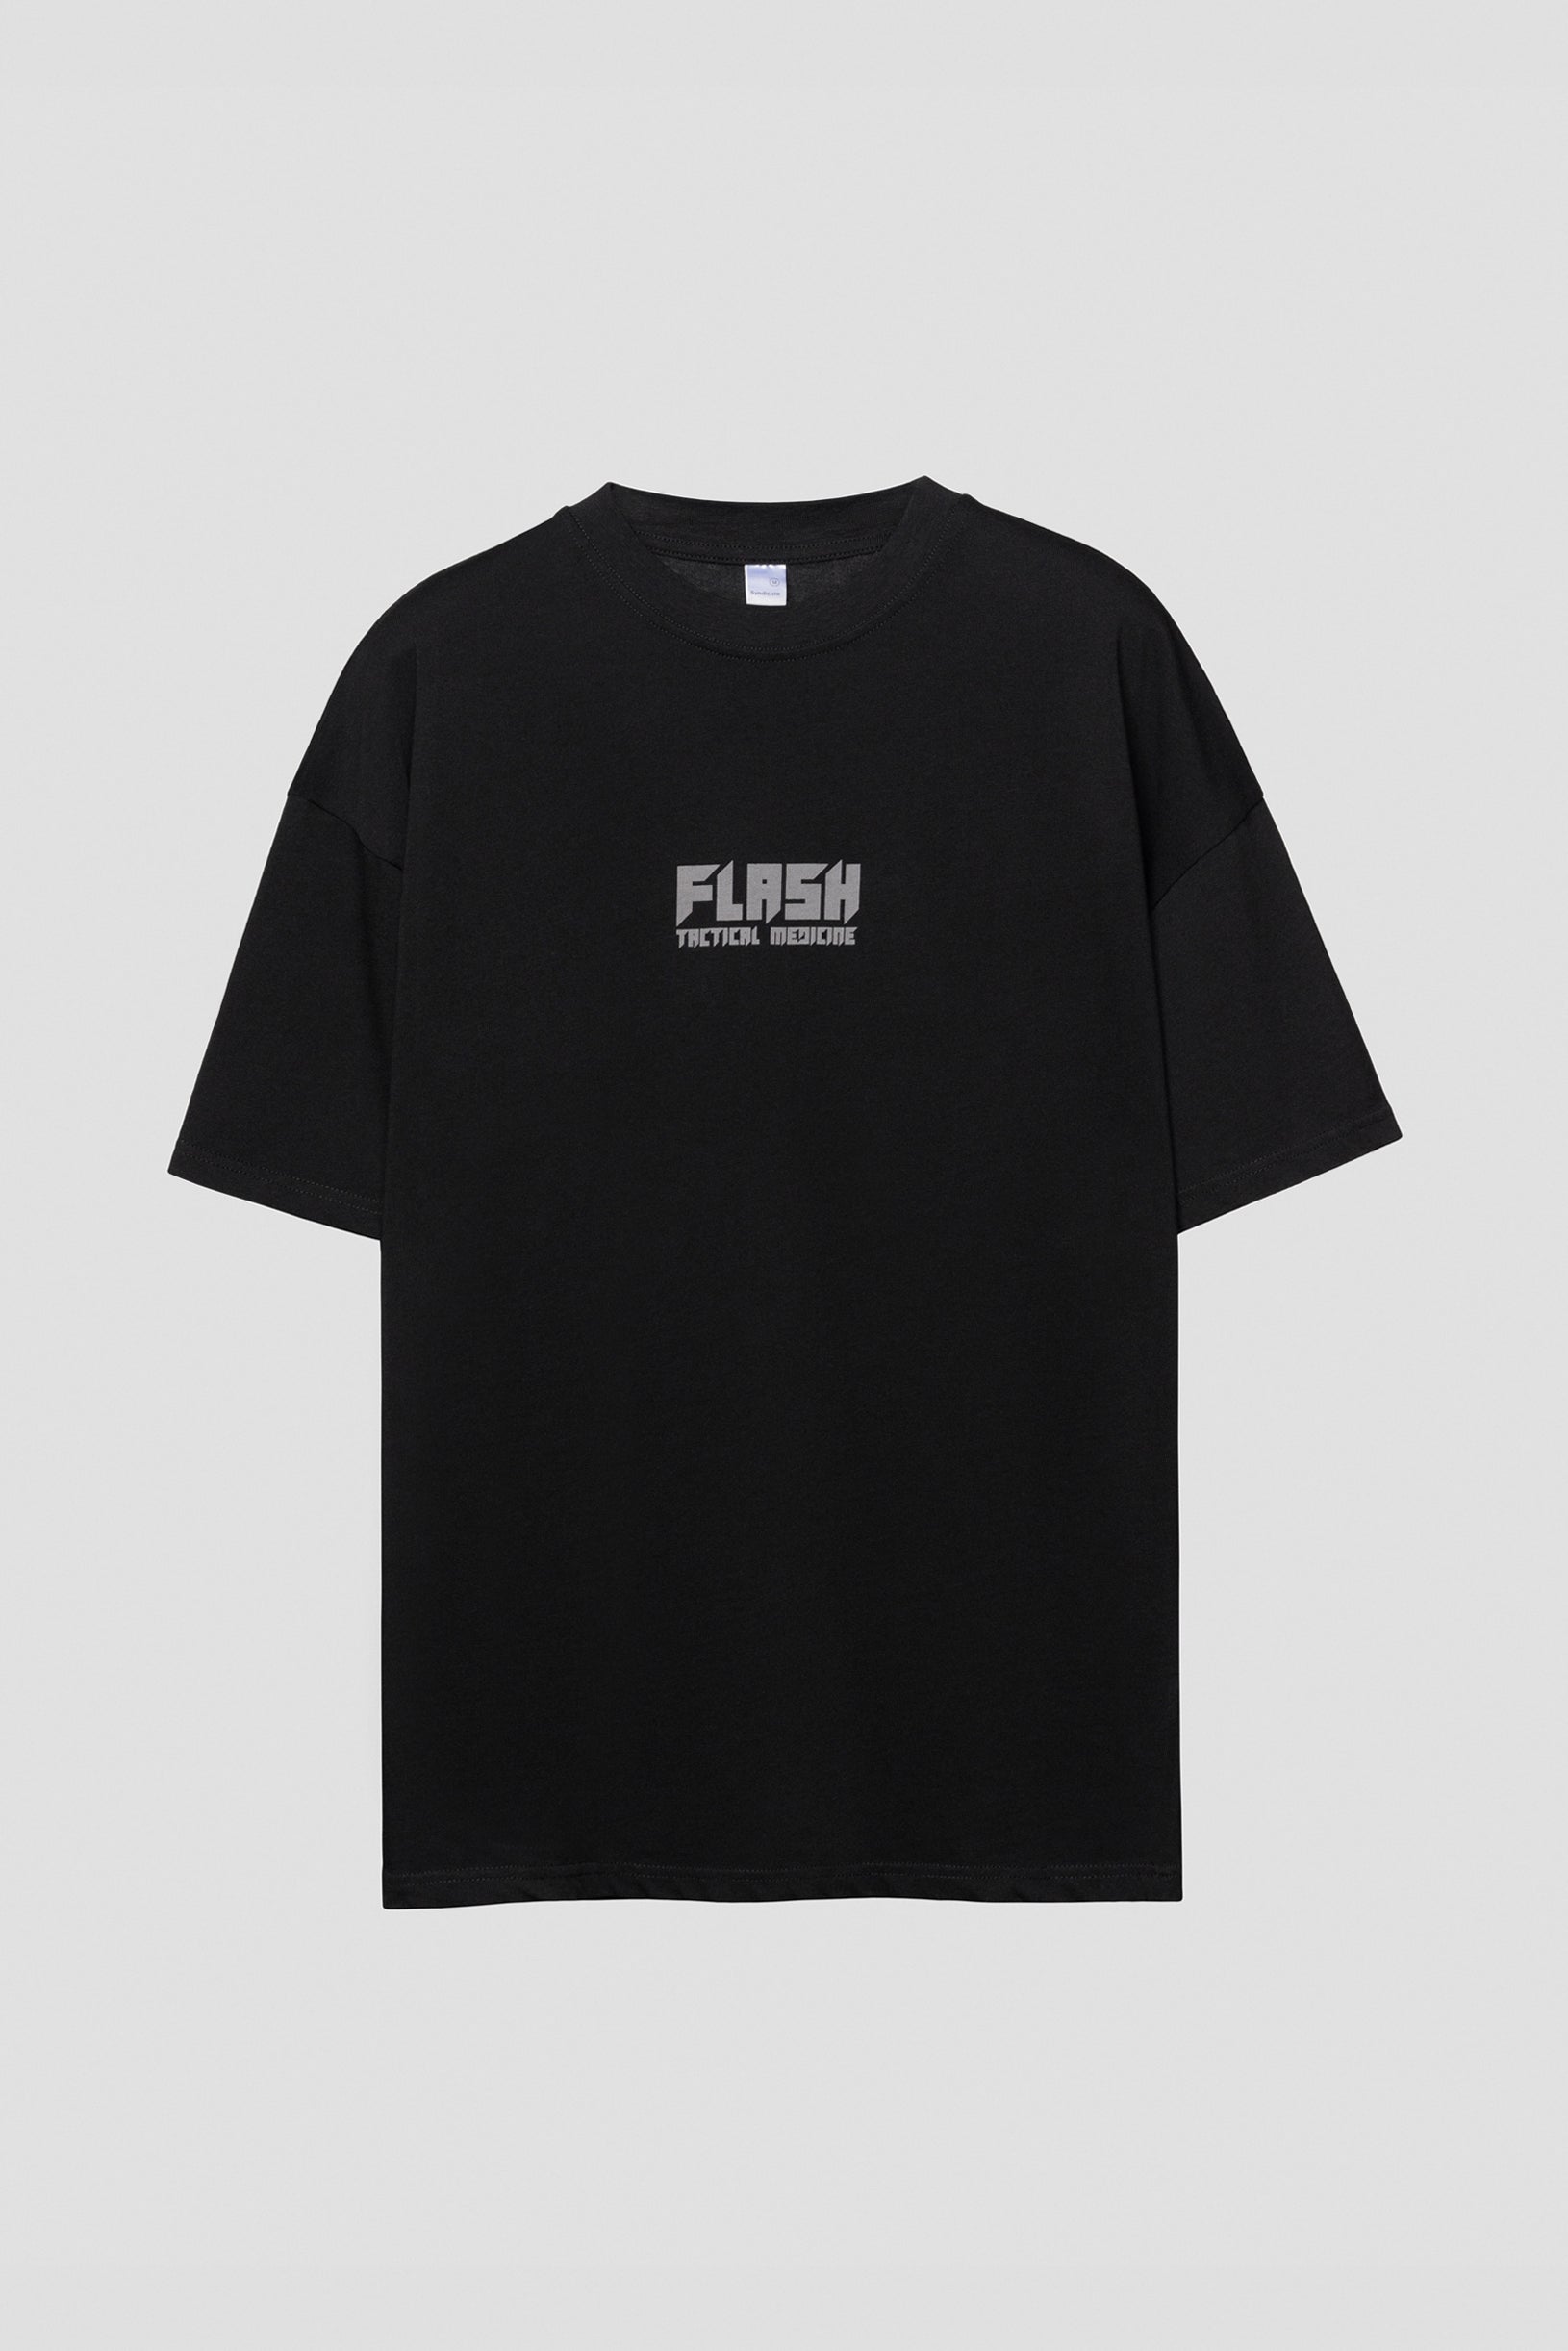 Flash oversize t-shirt